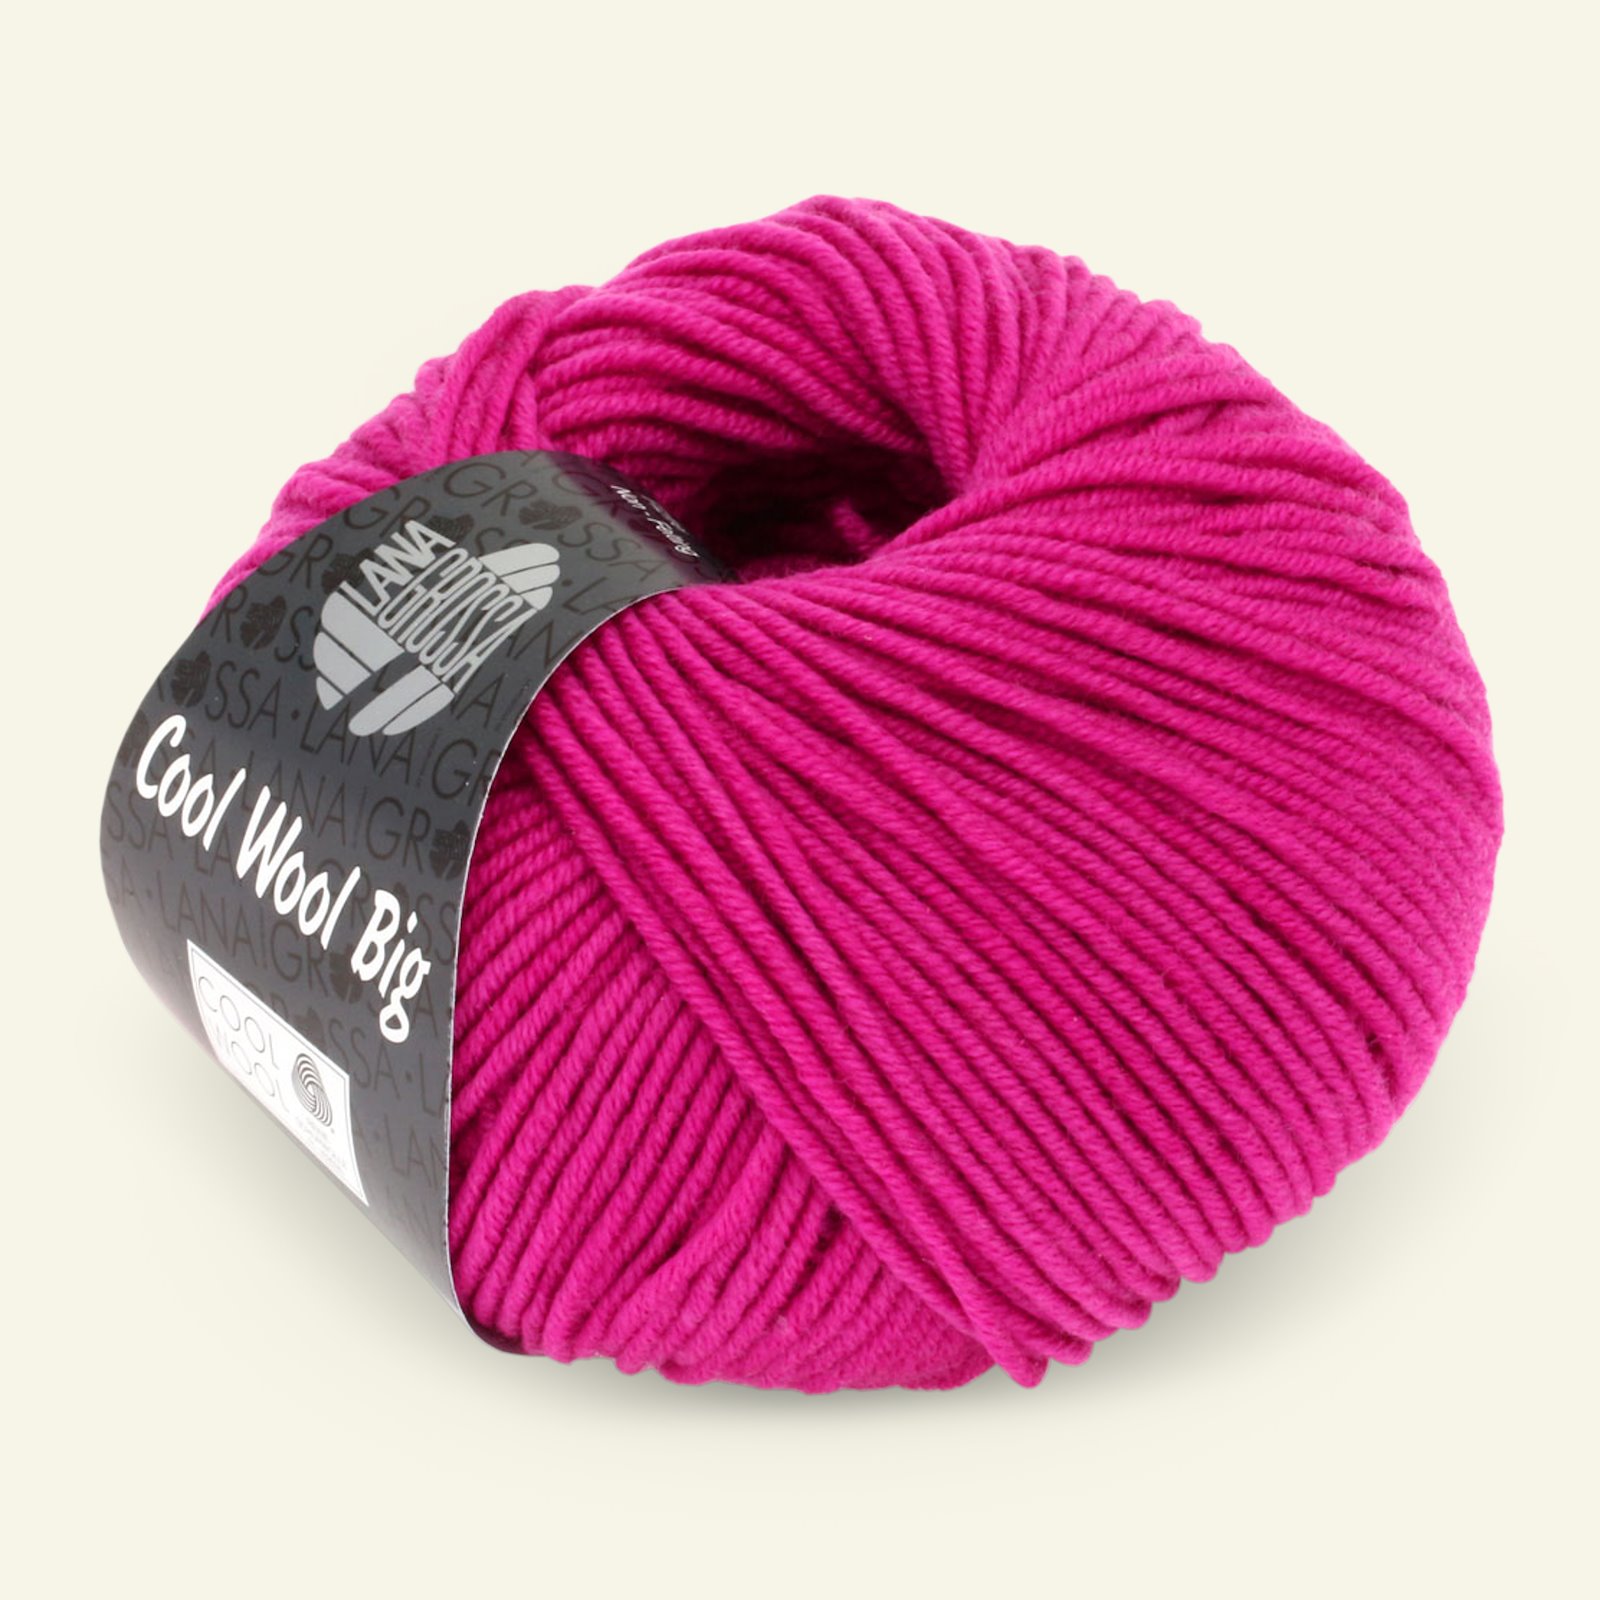 Lana Grossa, extrafine merino wool yarn "Cool Wool Big", warm pink 90001101_pack